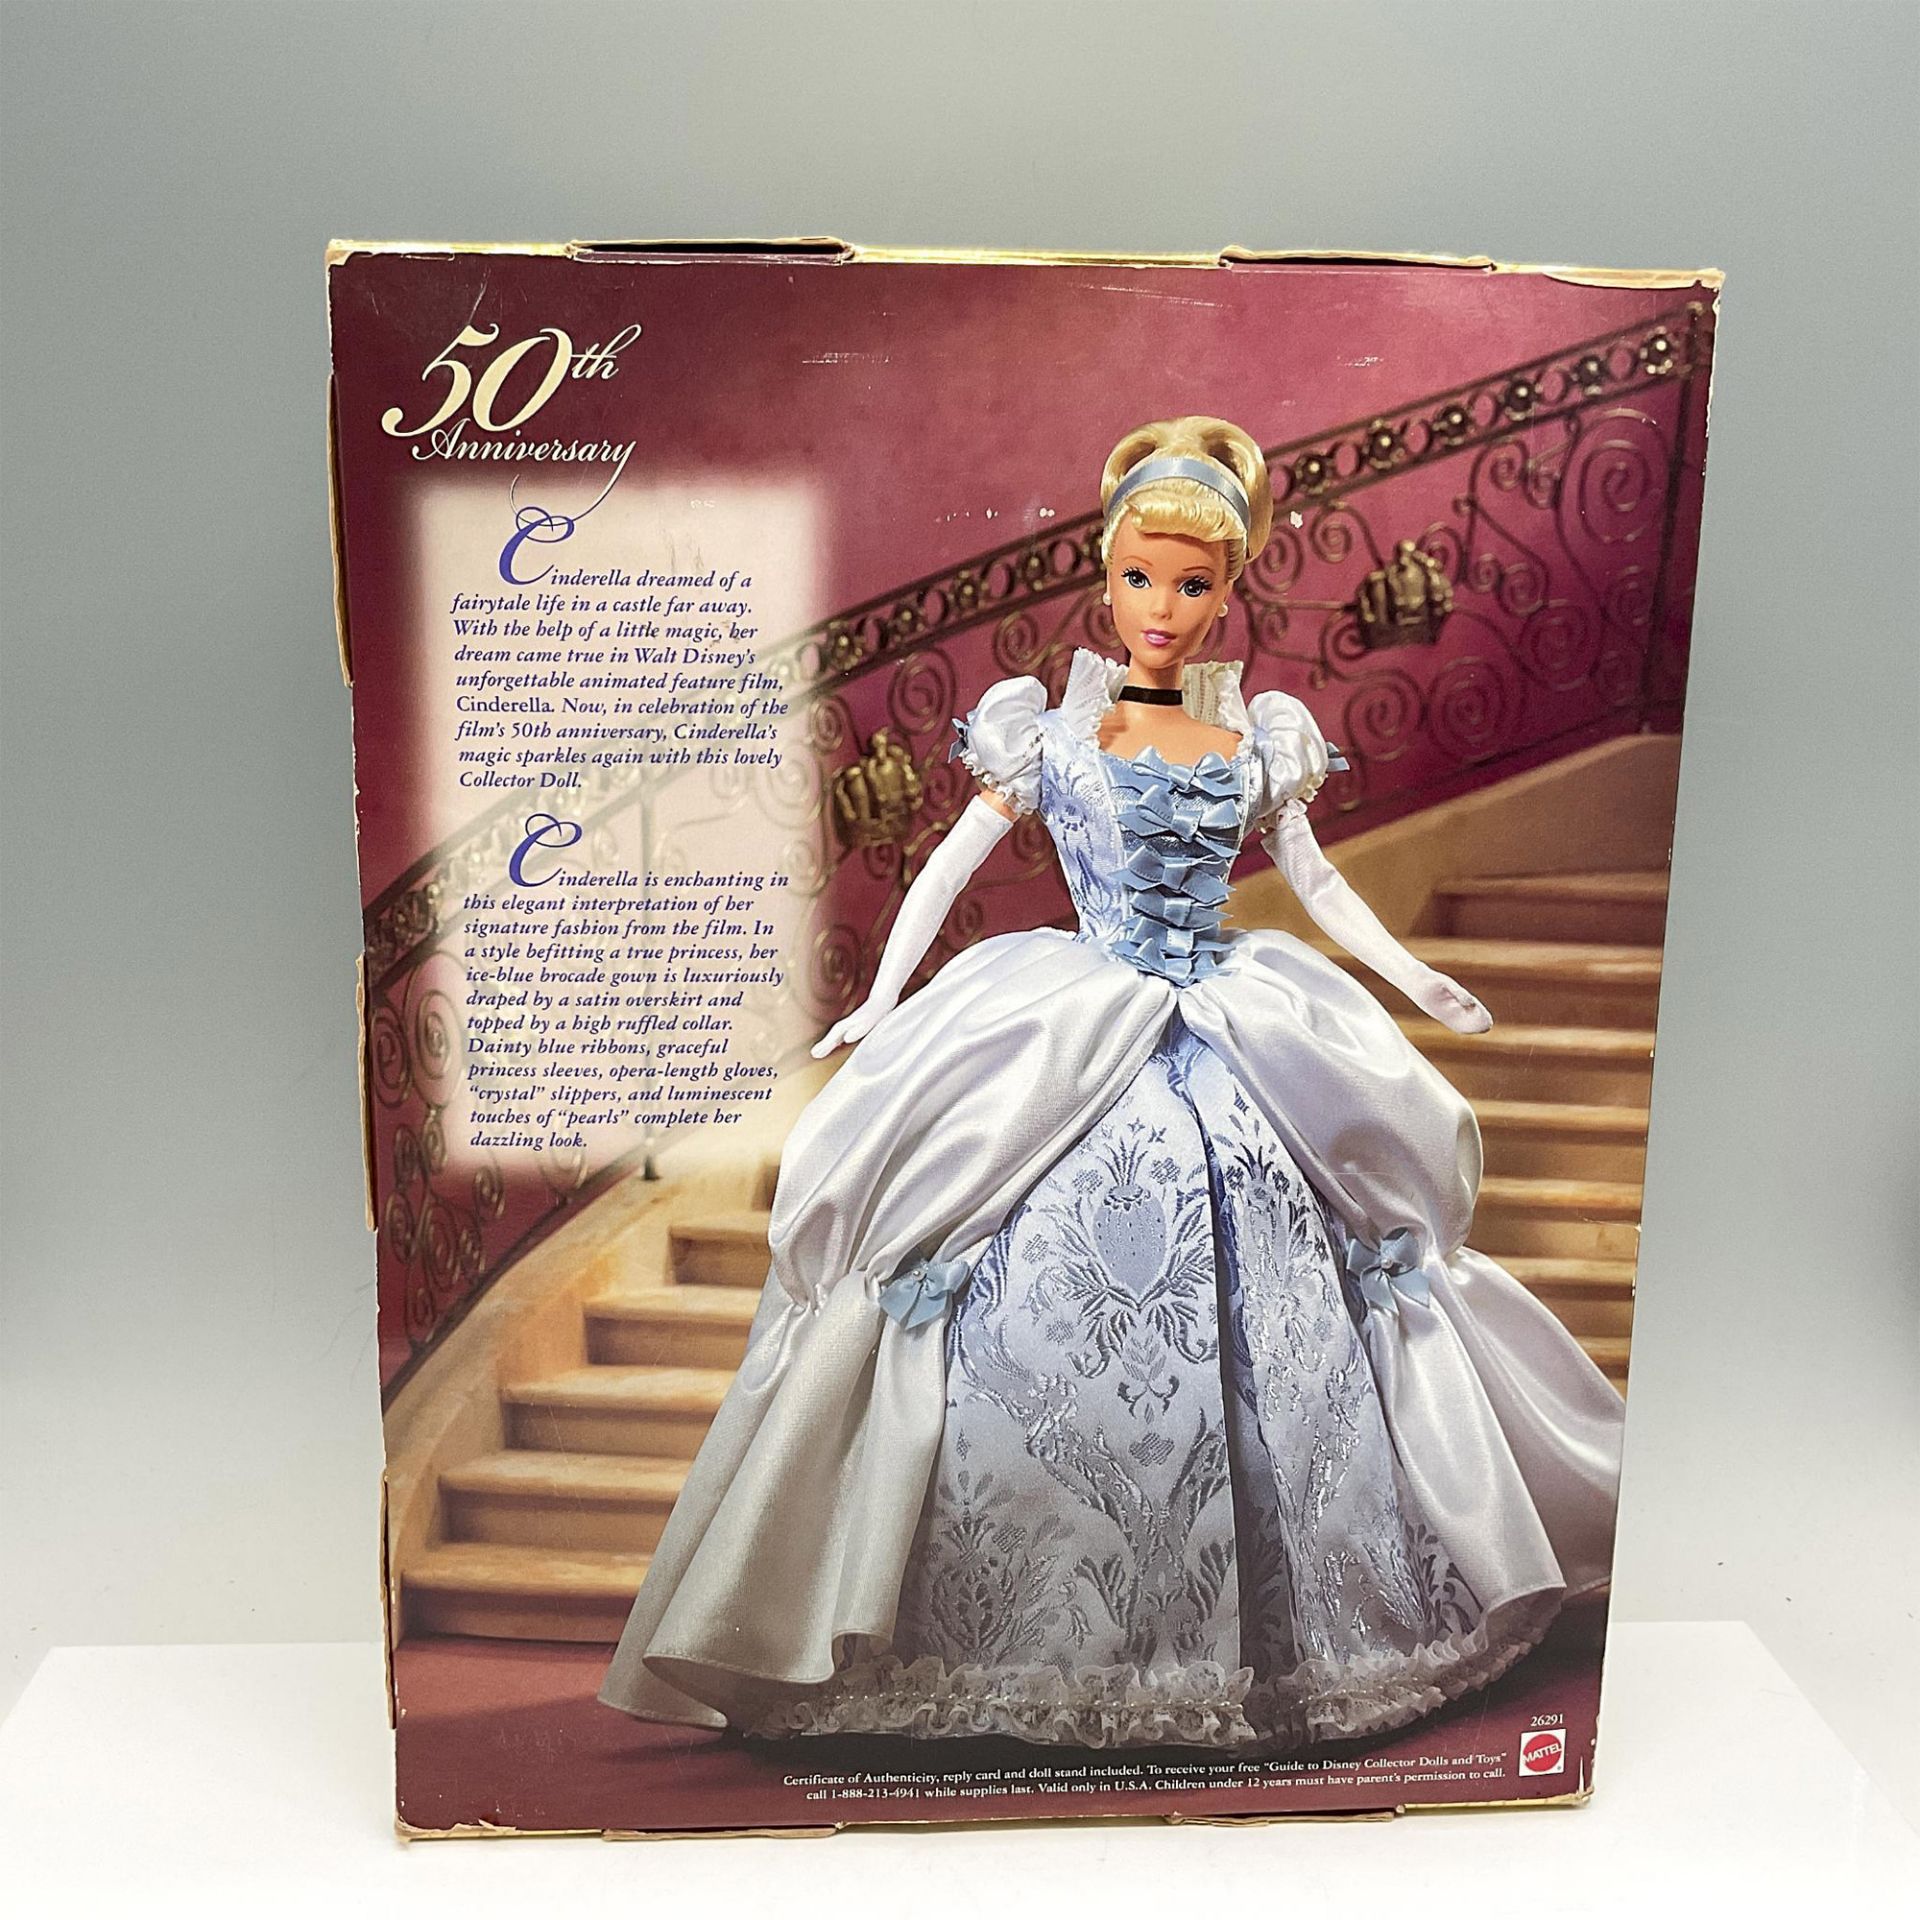 Mattel Disney's Collector Doll, Cinderella 50th Anniversary - Image 2 of 3